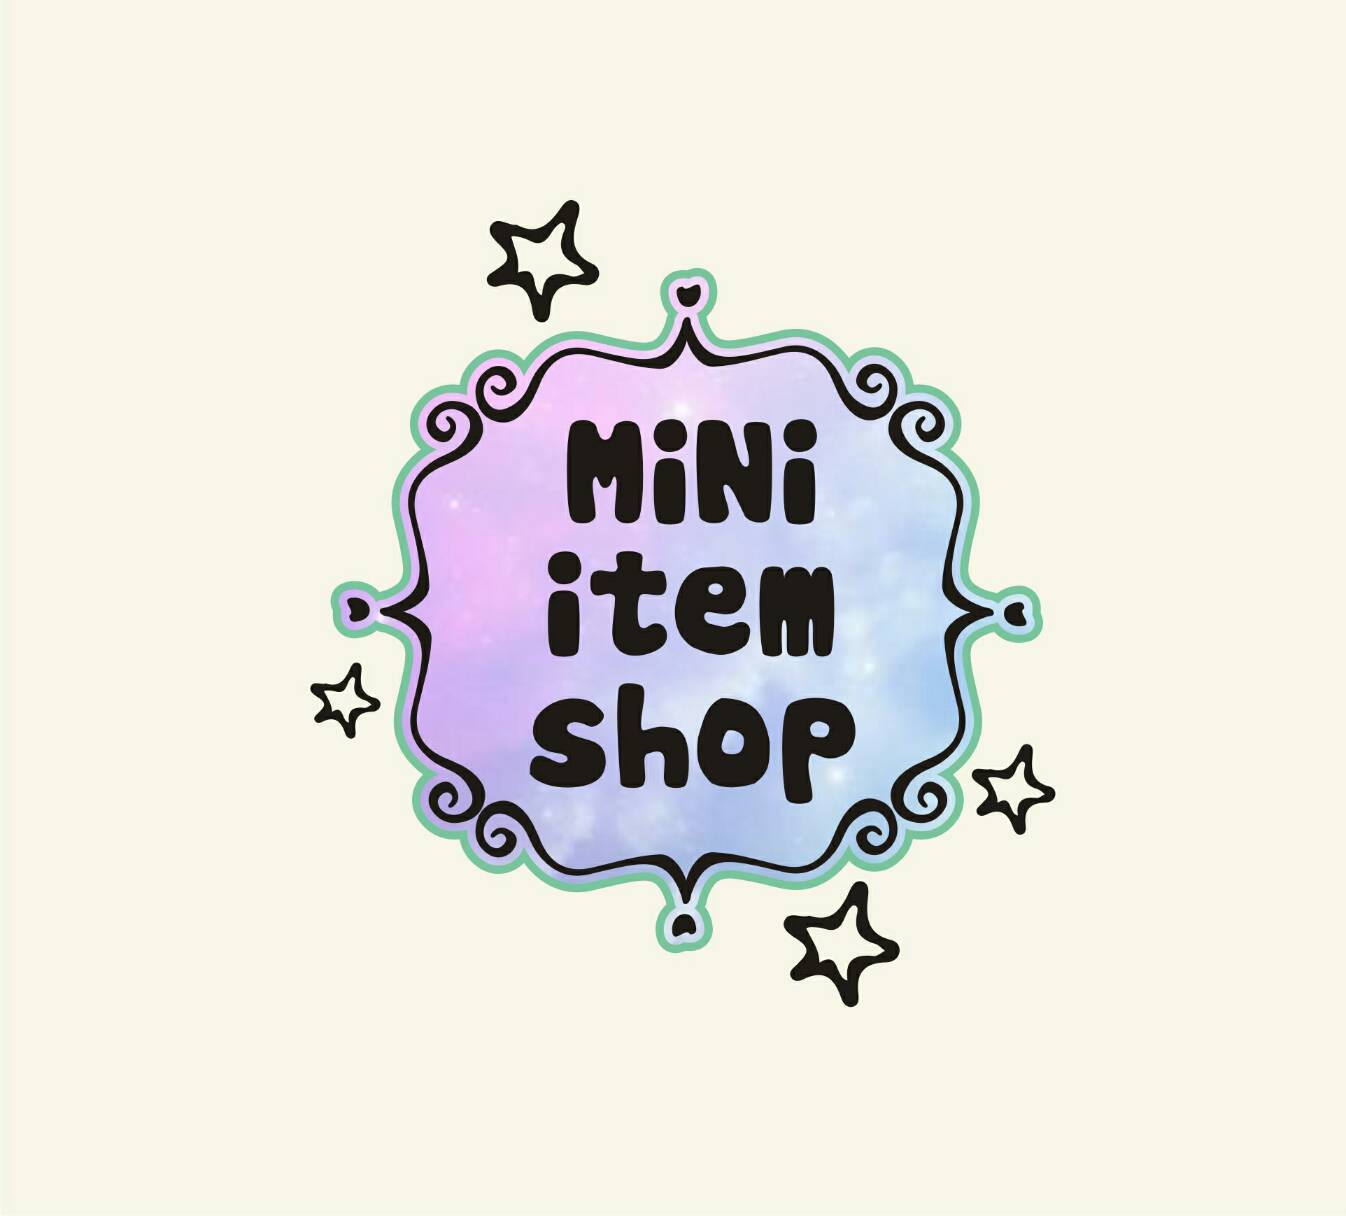 Mini Item Shop